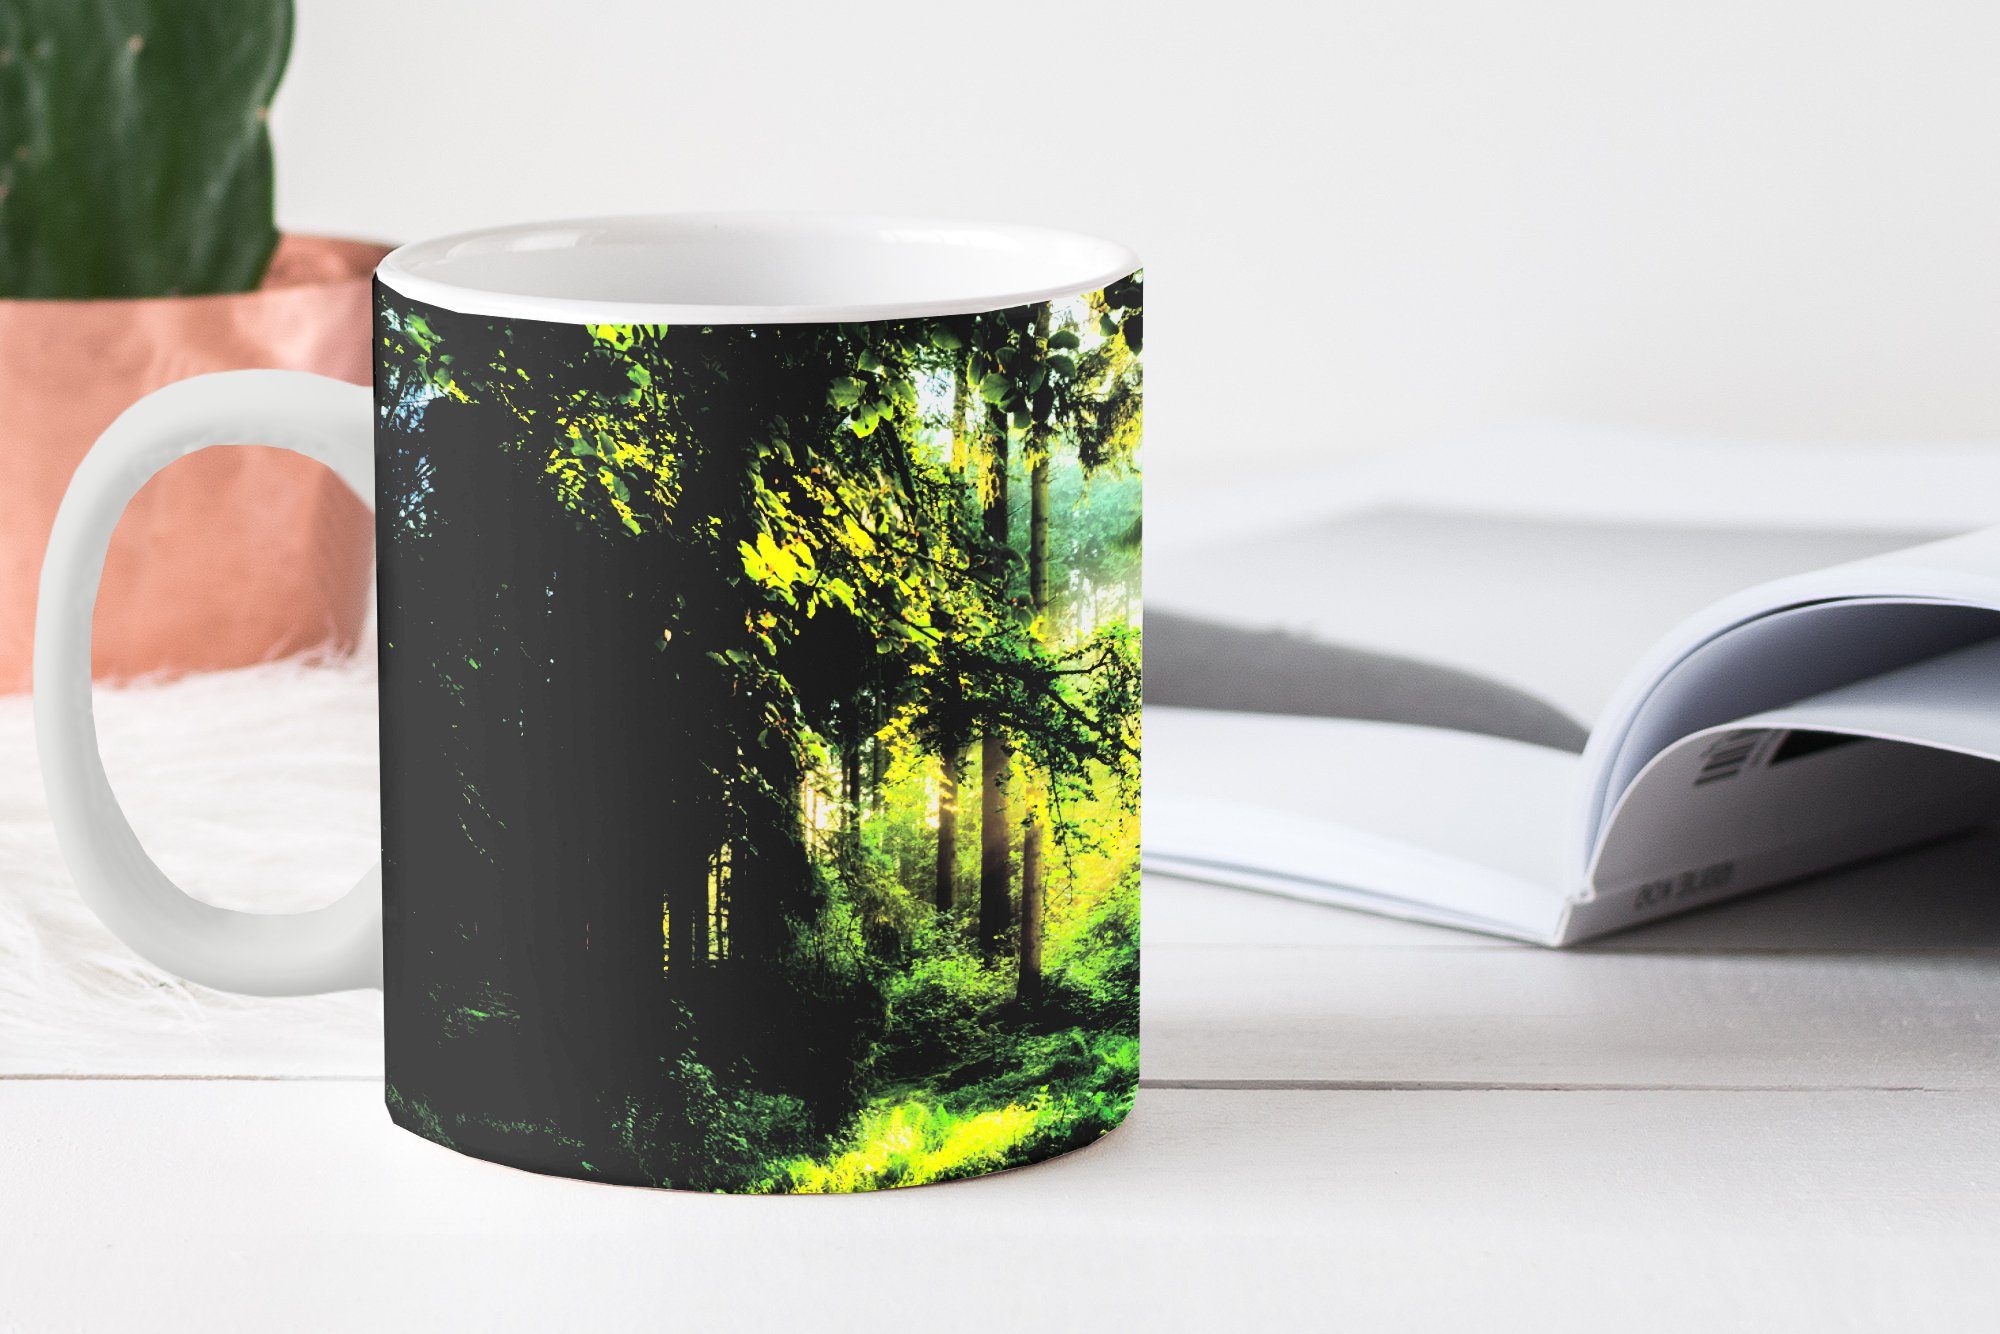 - Teetasse, Kaffeetassen, Becher, - Keramik, Tasse Geschenk Teetasse, Sonne Wald Bäume, MuchoWow